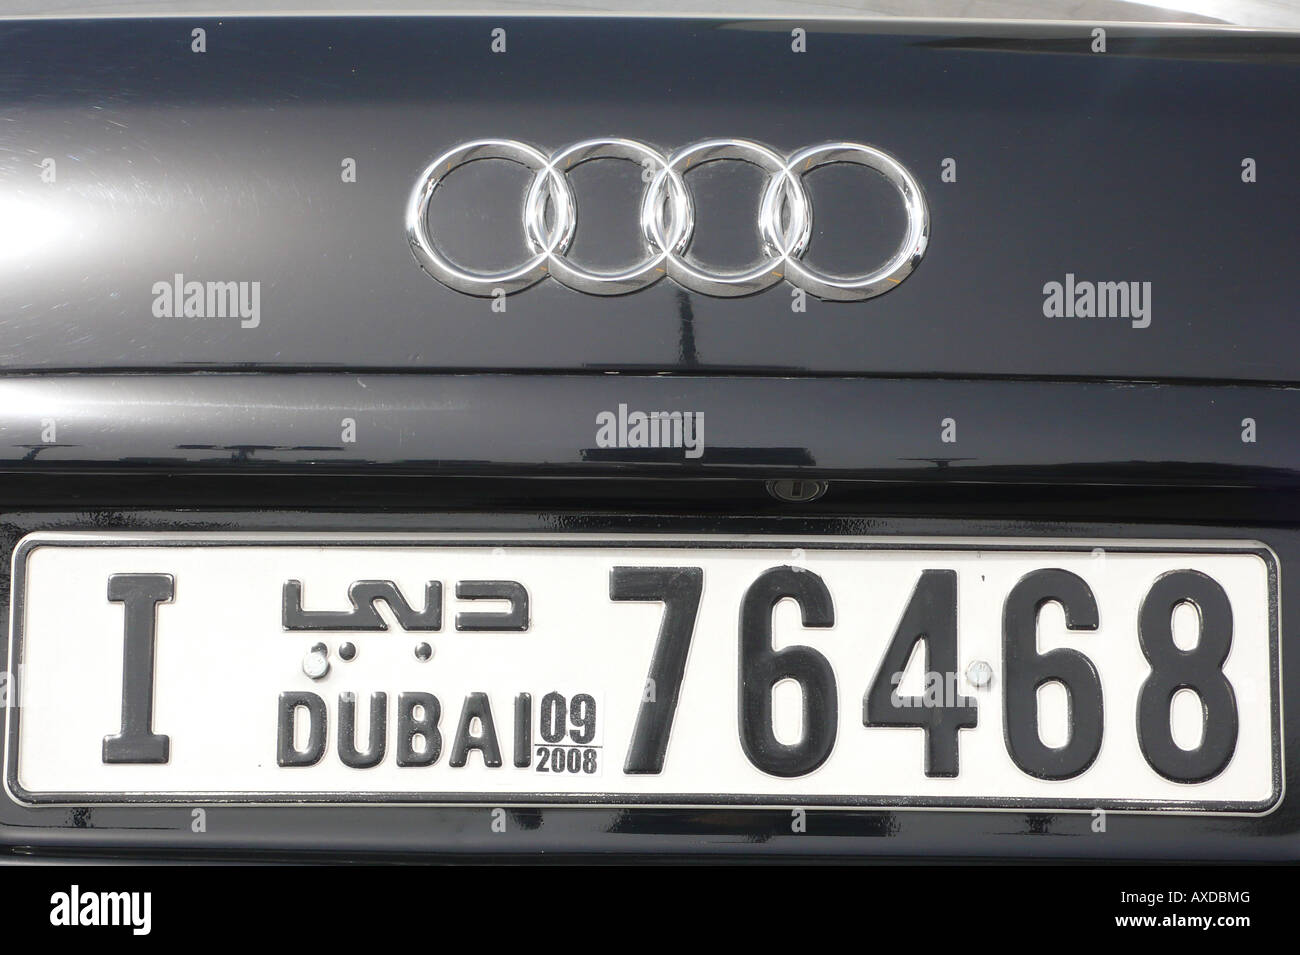 A Dubai licence plate on a black Audi seen in Abu Dhabi, UAE. Dubai is written in both Arabic and English. Stock Photo